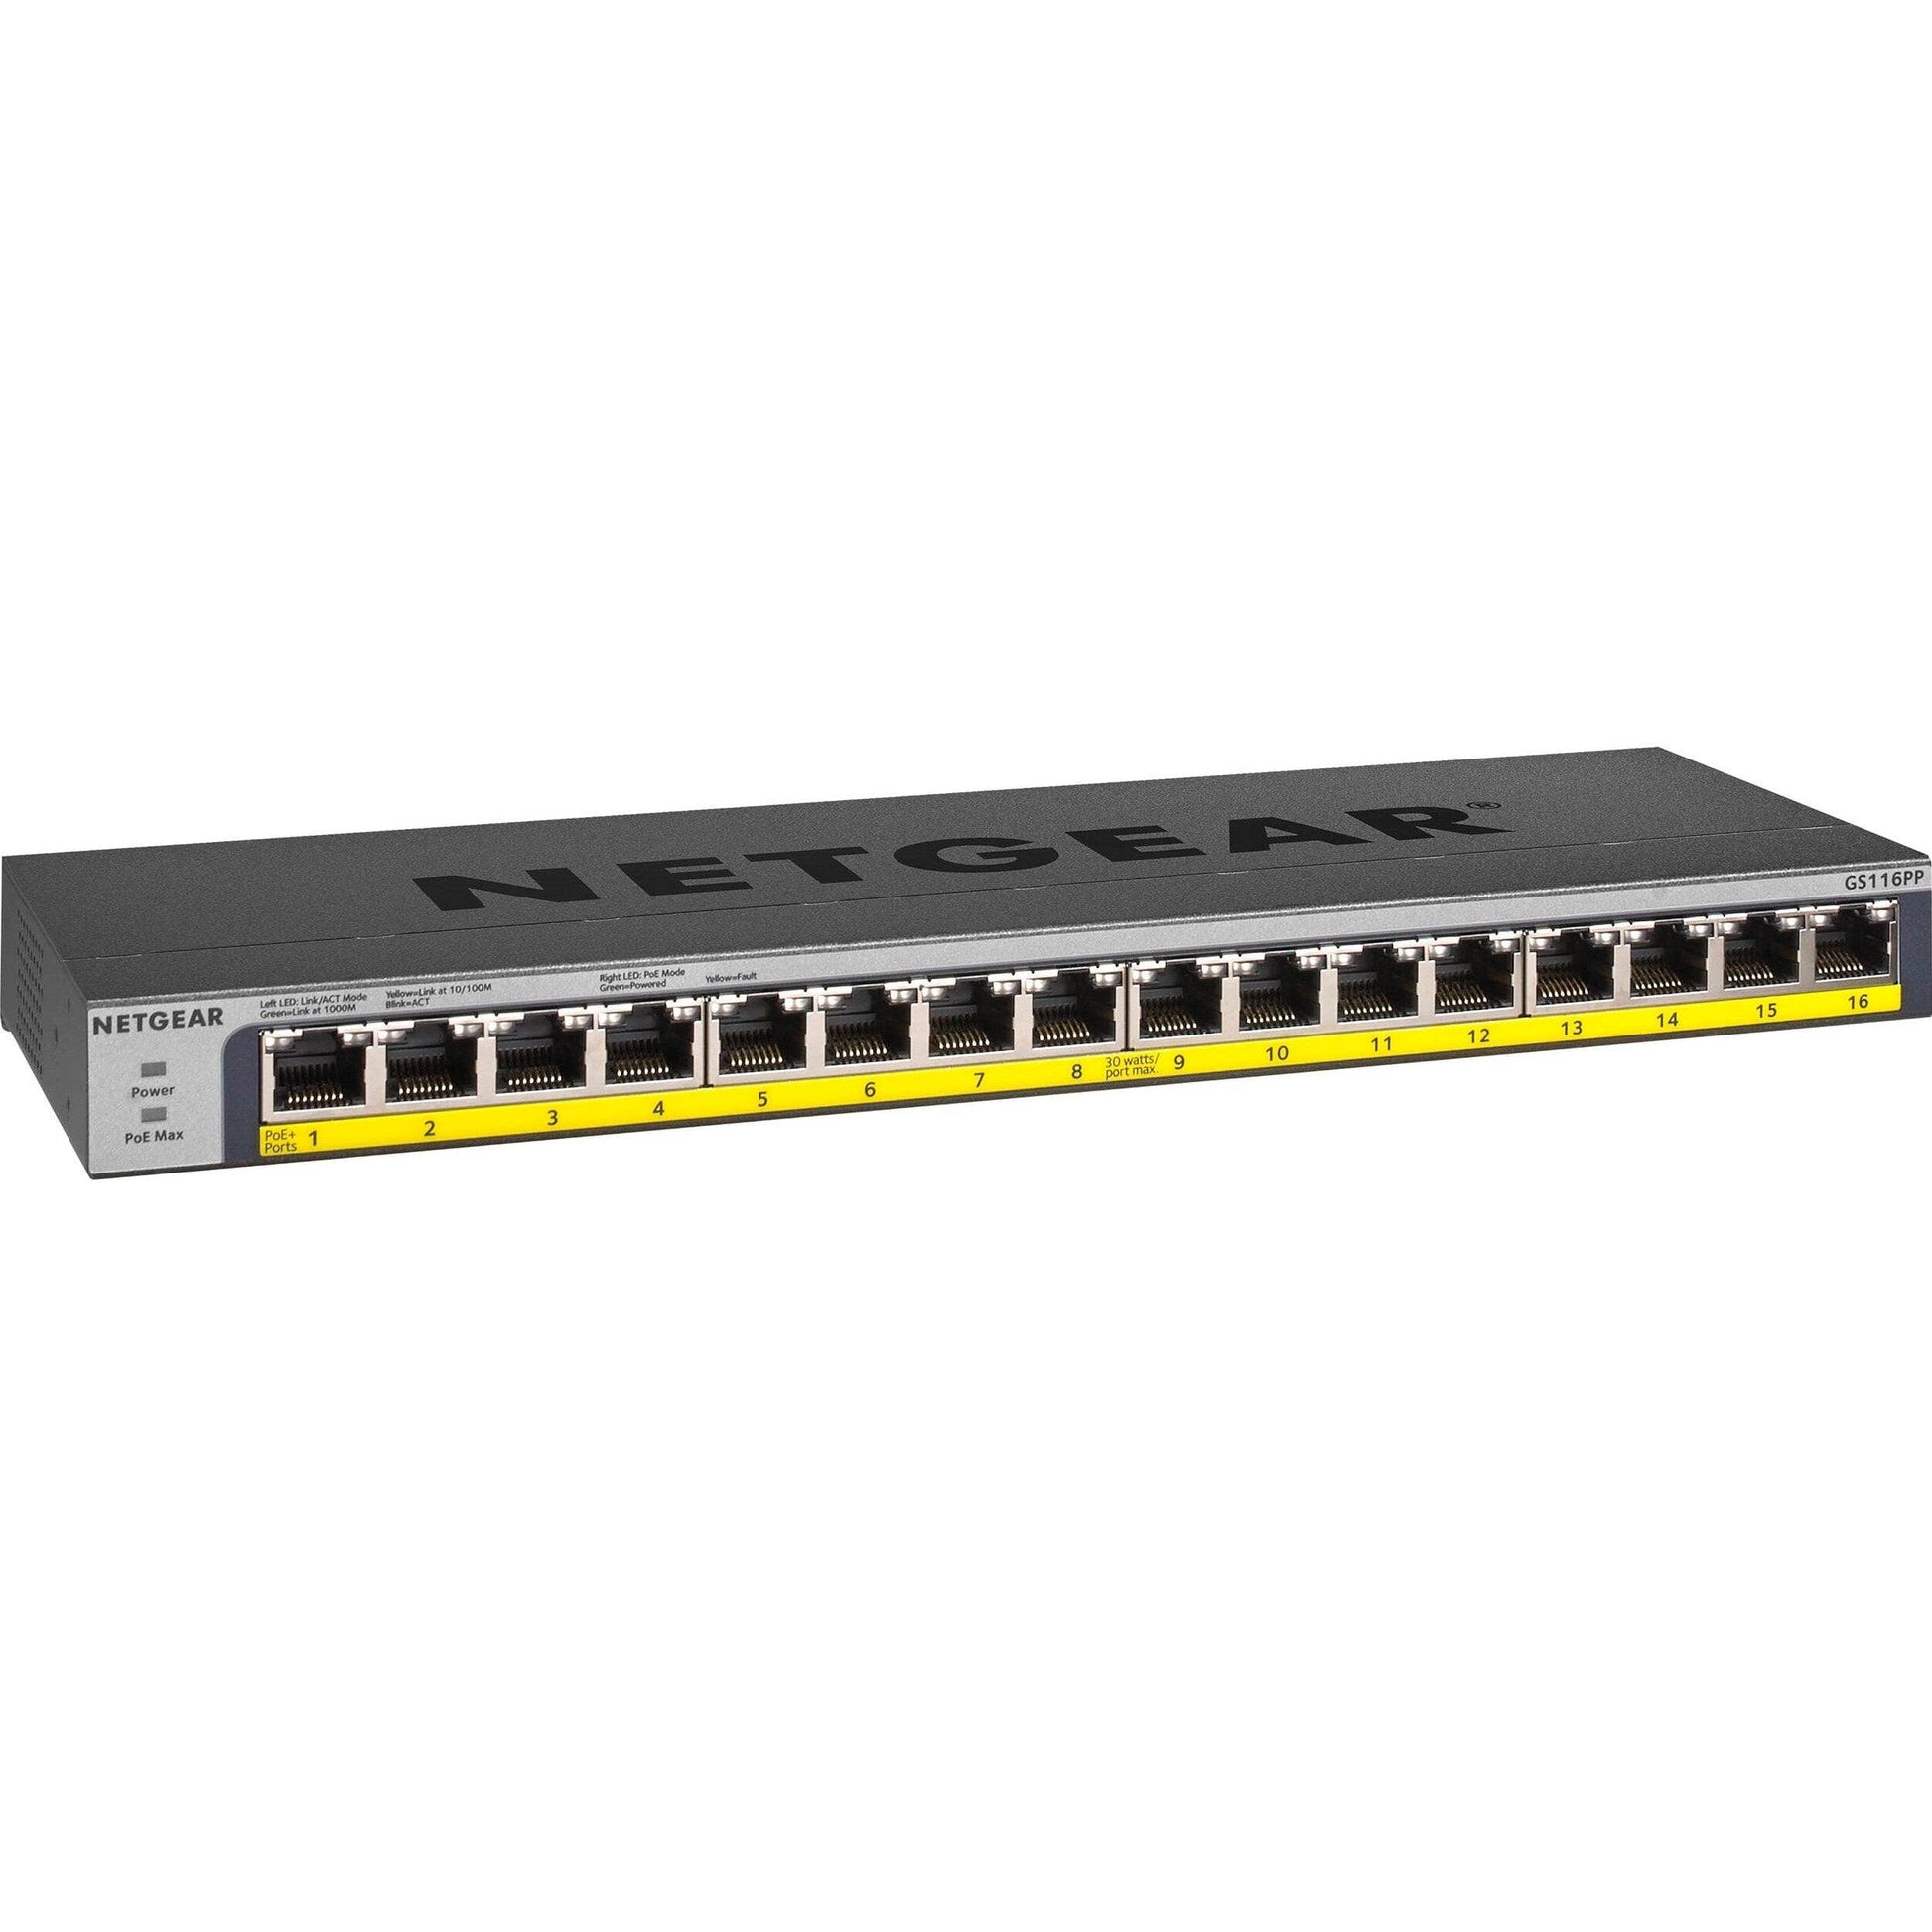 Netgear GS116PP 16 Port Unmanaged Gigabit PoE+ Switch - GS116PP - New - GS116PP - Reef Telecom